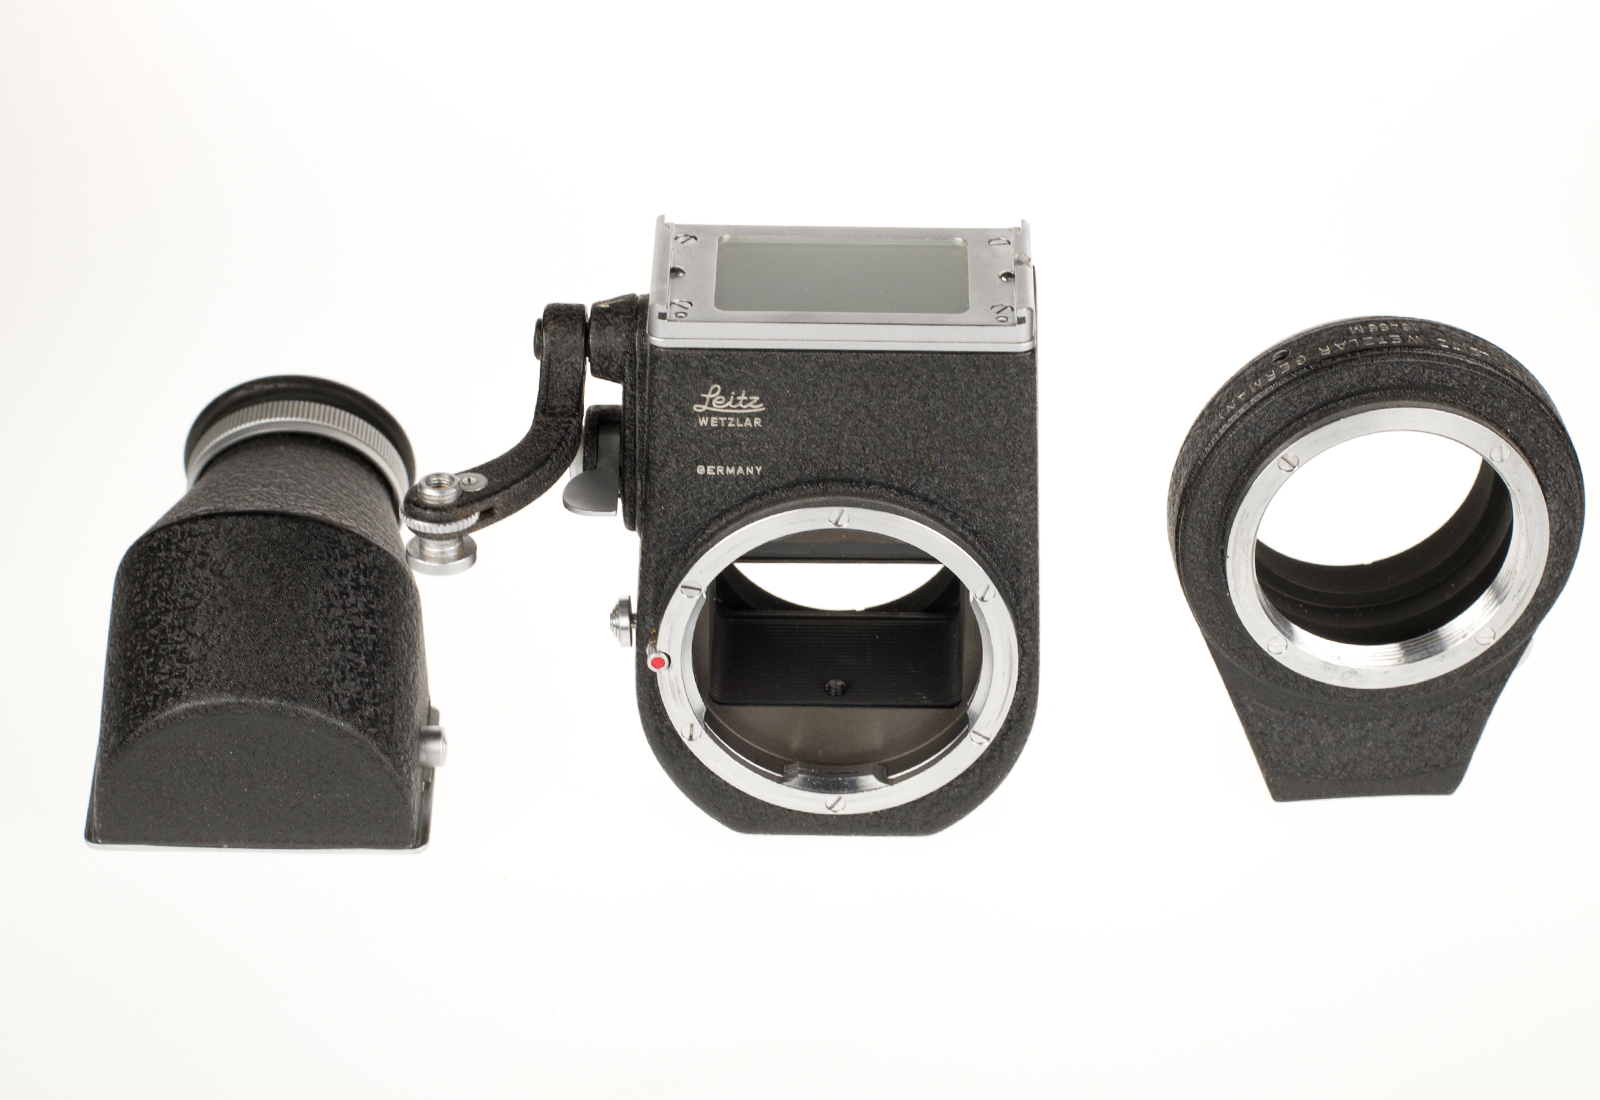 Leica MD, chrome + Telyt 1:4/200mm, black + Visoflex II